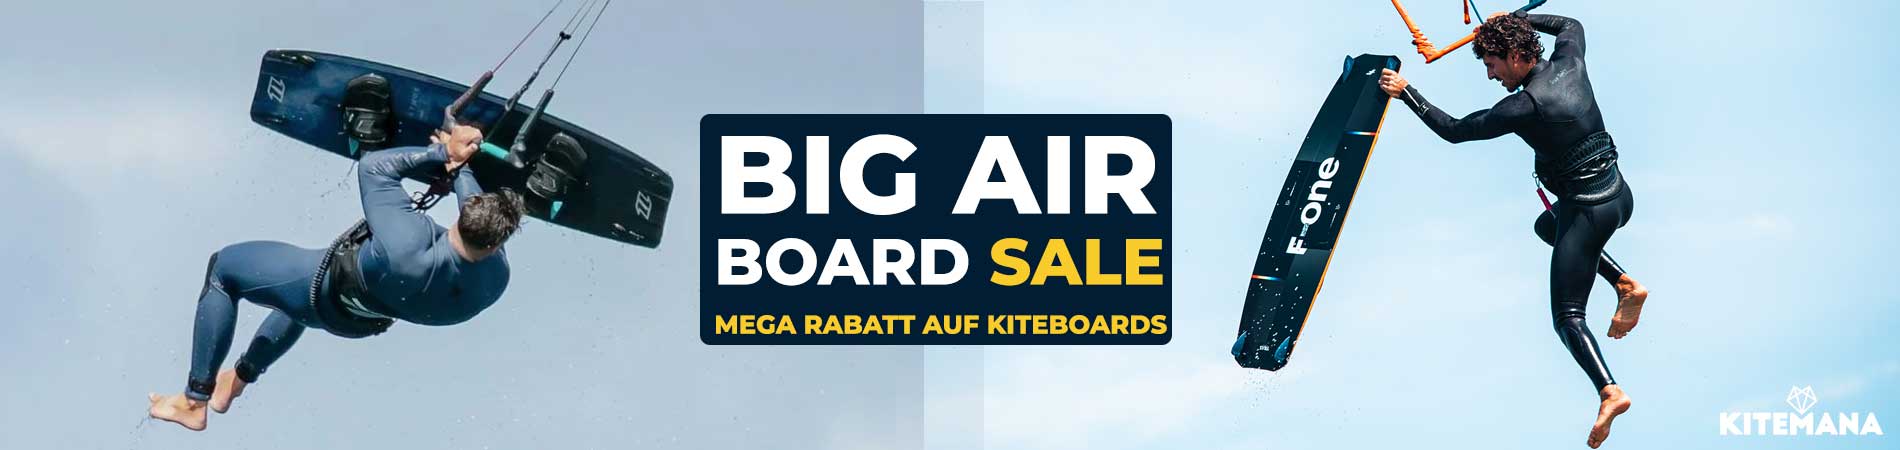 big air board sale